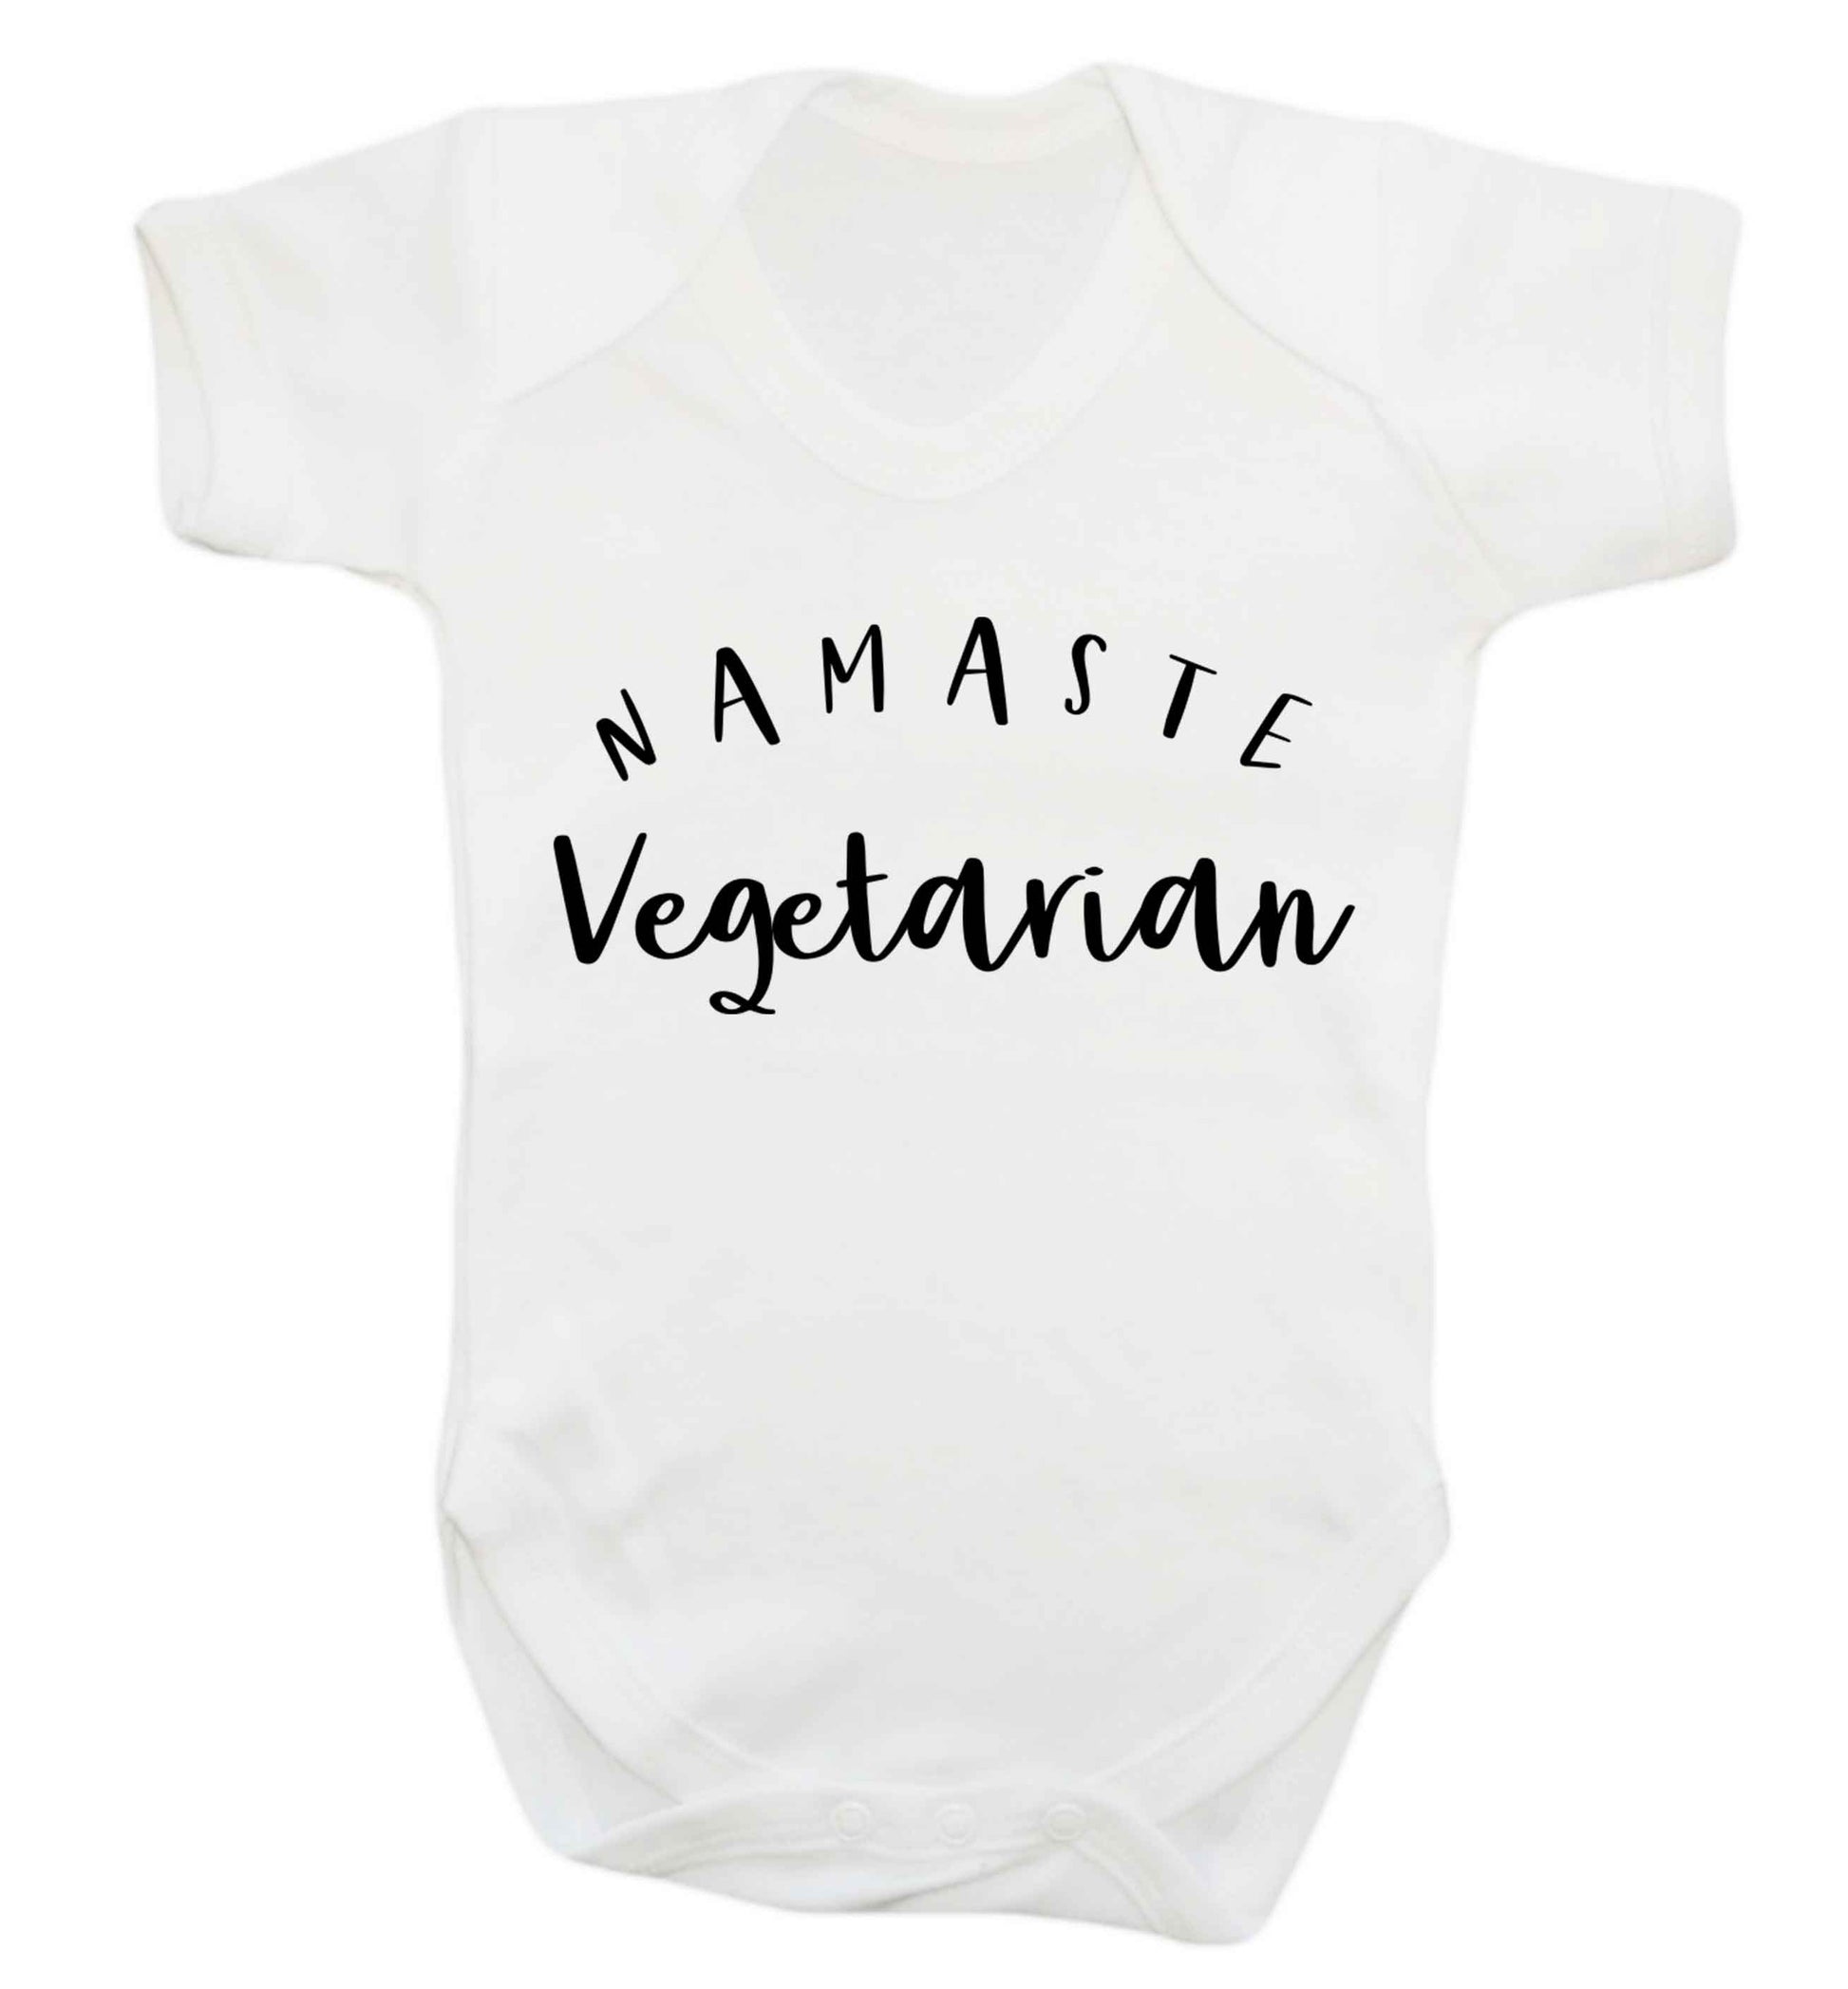 Namaste vegetarian Baby Vest white 18-24 months